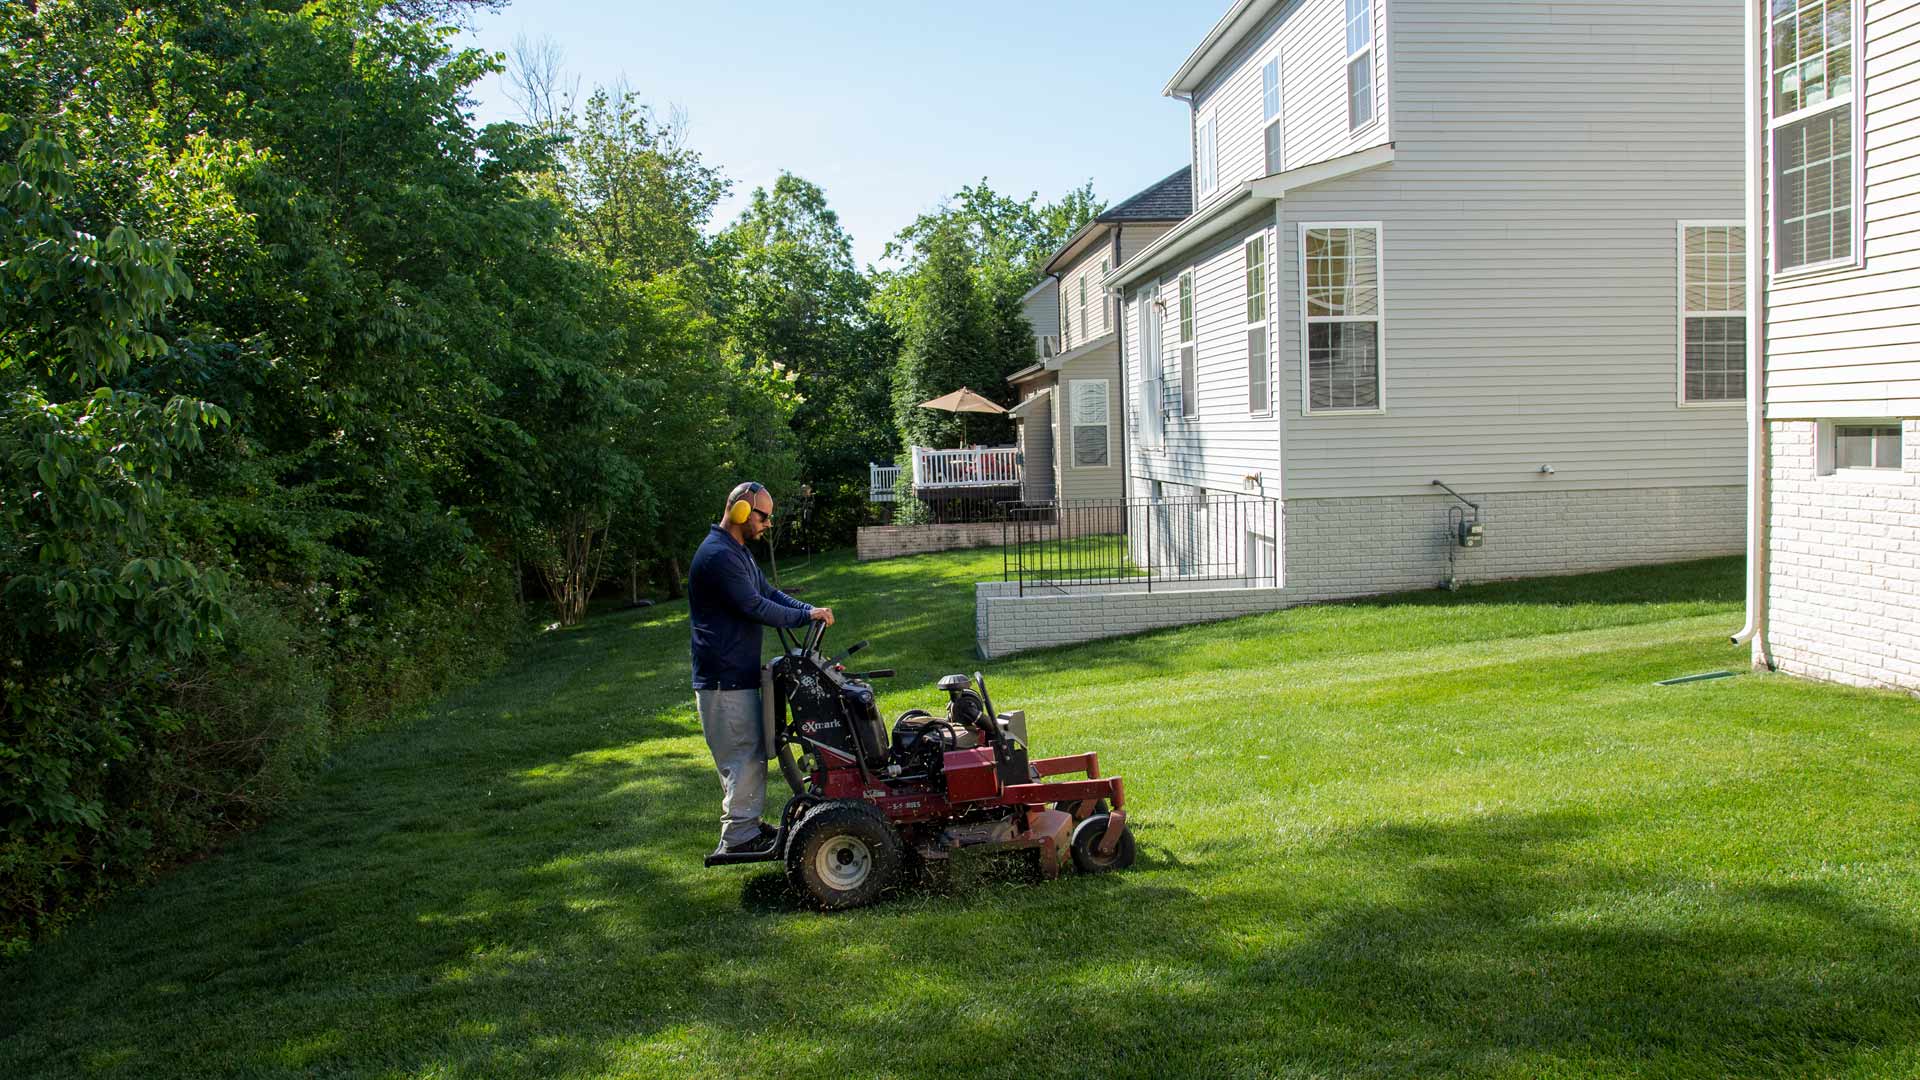 Hambleton Lawn & Landscape professional servicing lawn in South Riding, VA.